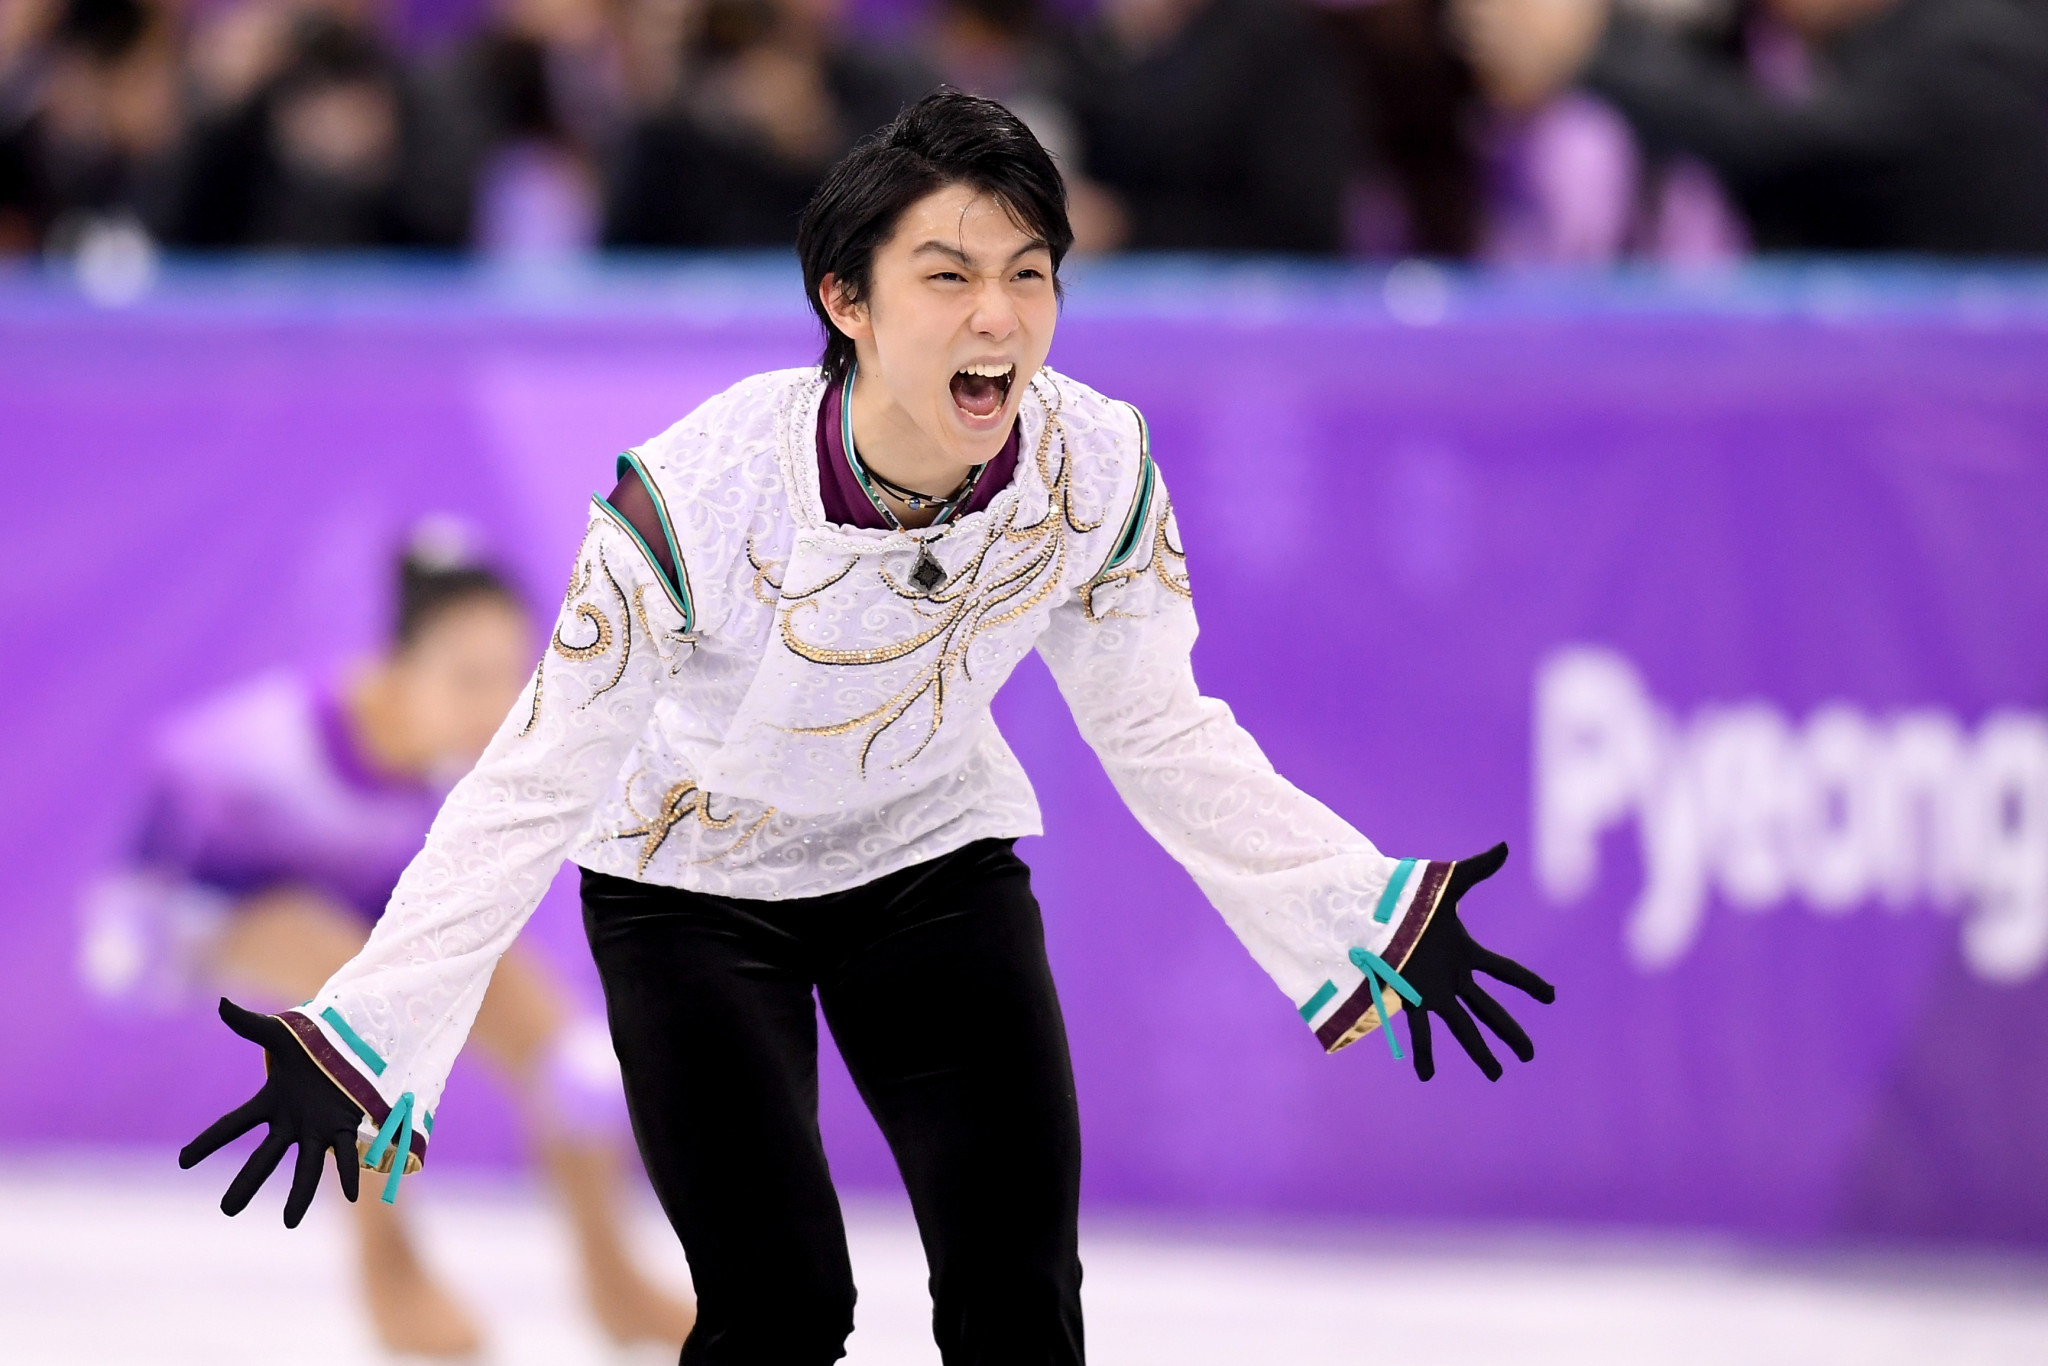 Asthmatic Hanyu to skip Grand Prix of Figure Skating this season